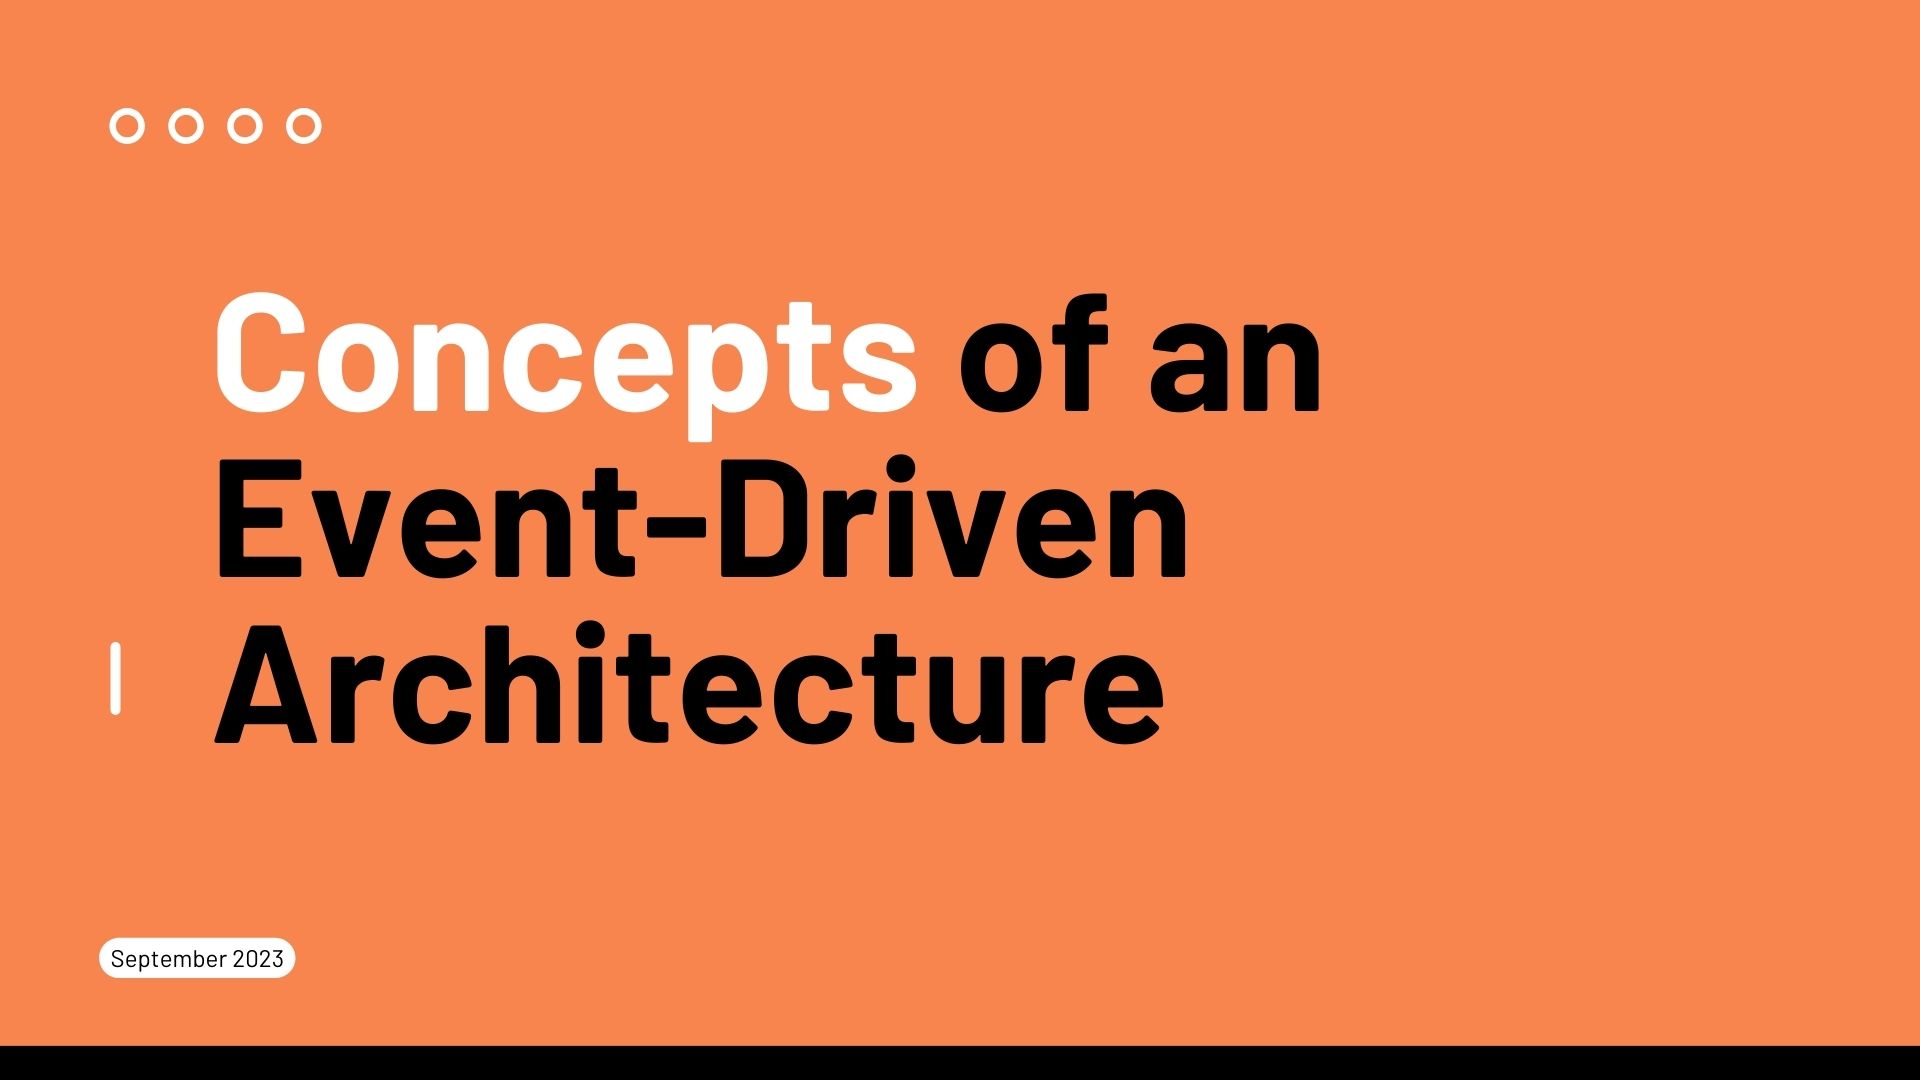 Event-Driven Architecture explained